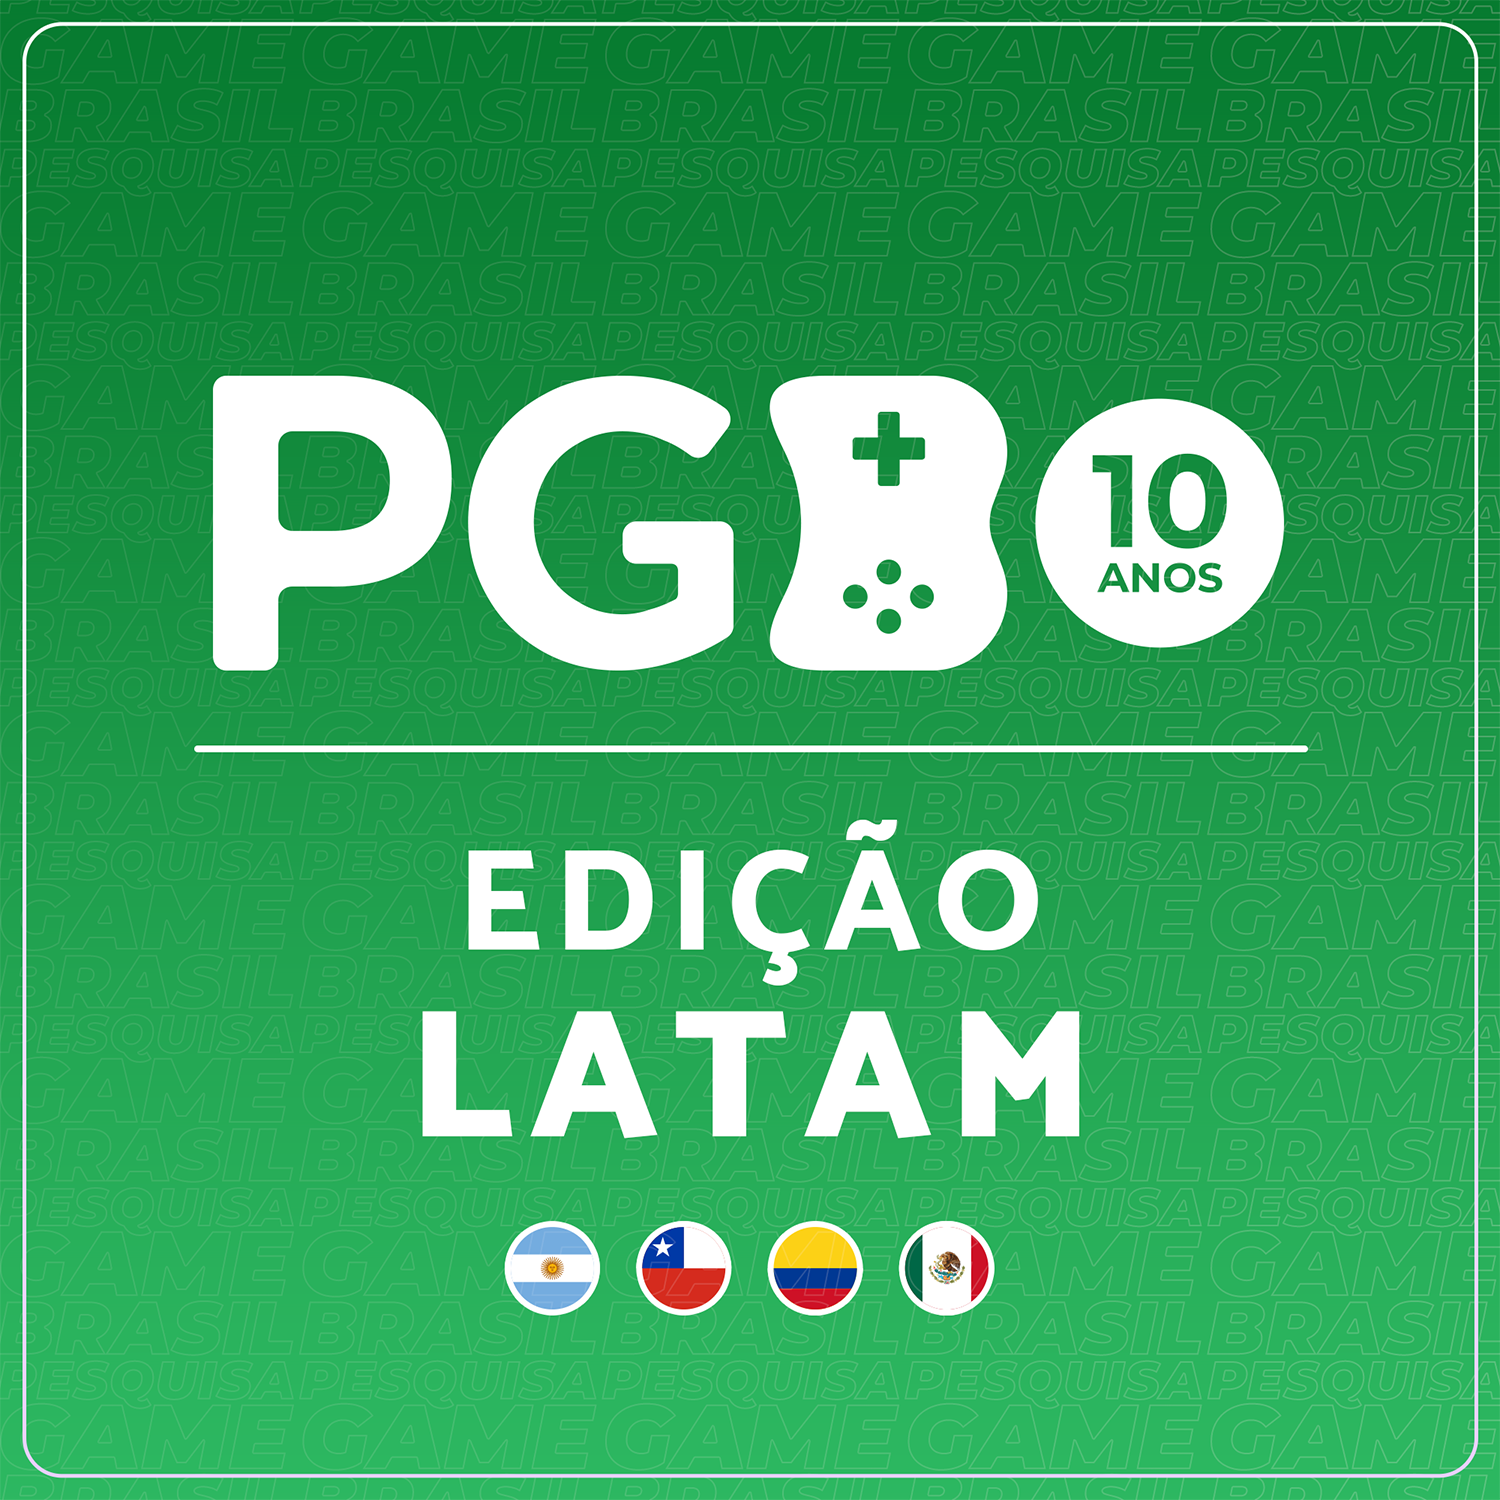 One GameBR  São Paulo SP